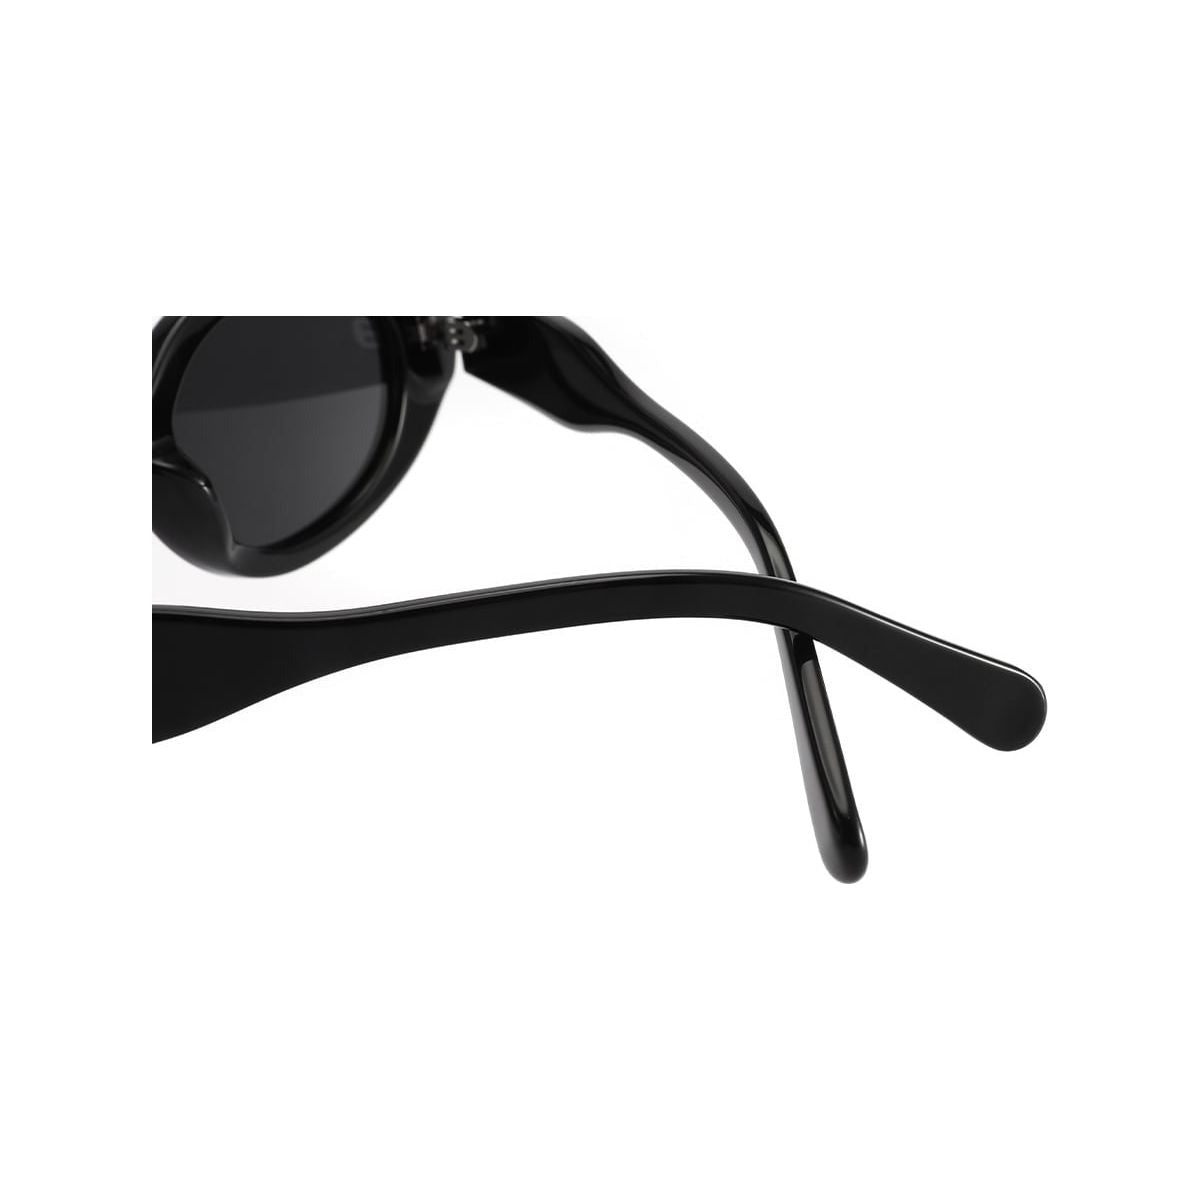 Candye Acetate Oval Sunglasses SG4973 